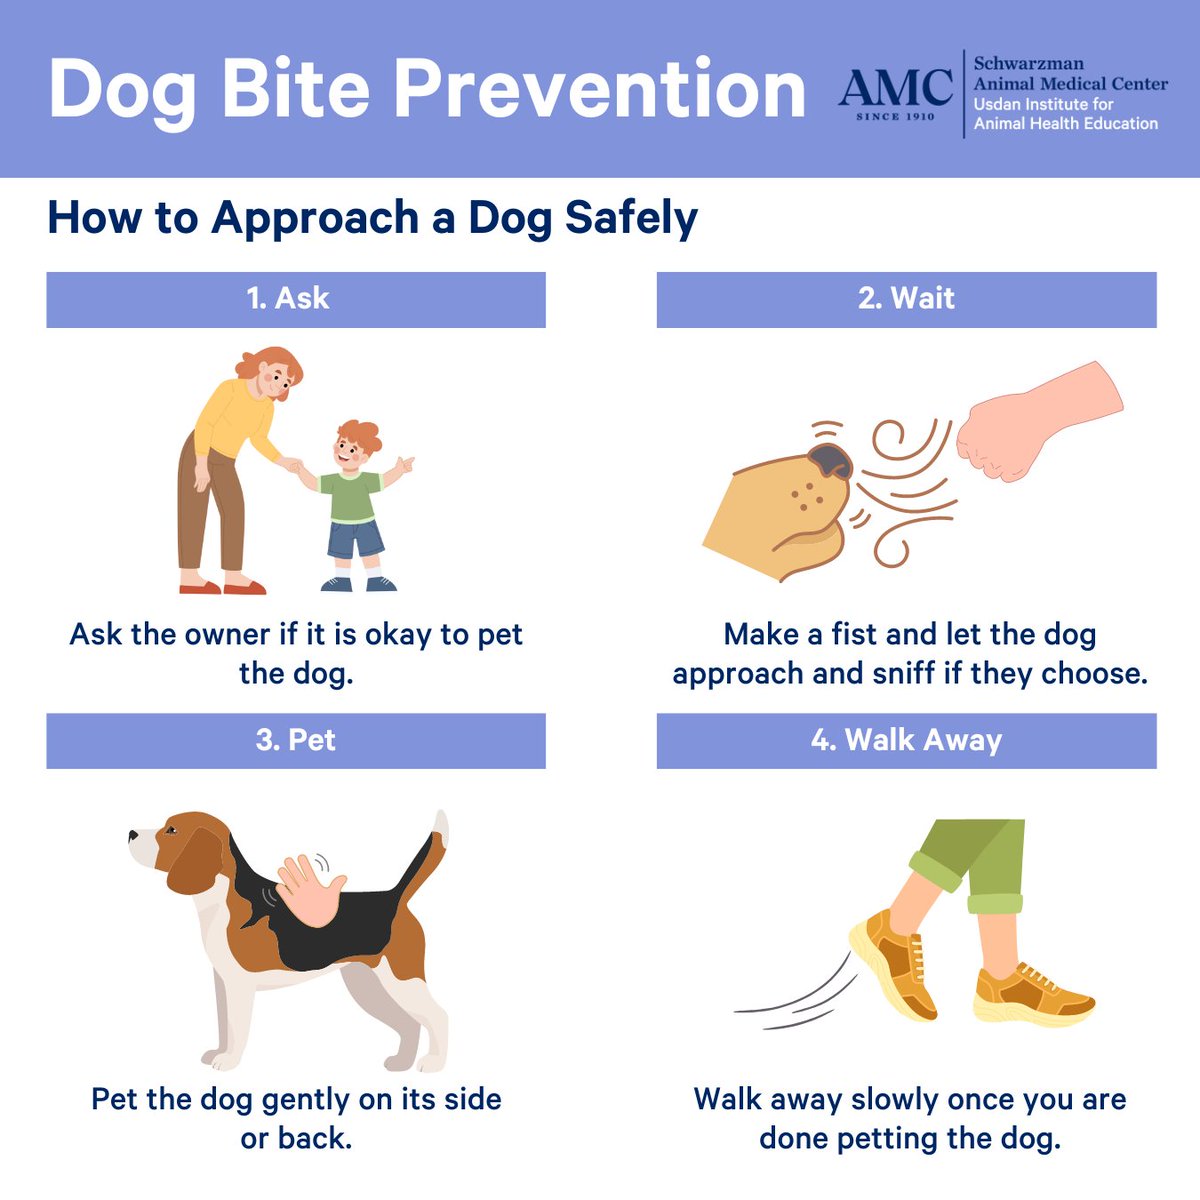 amcny.org/wp-content/upl… From Schwarzman Animal Medical Center: Dog Bite Prevention